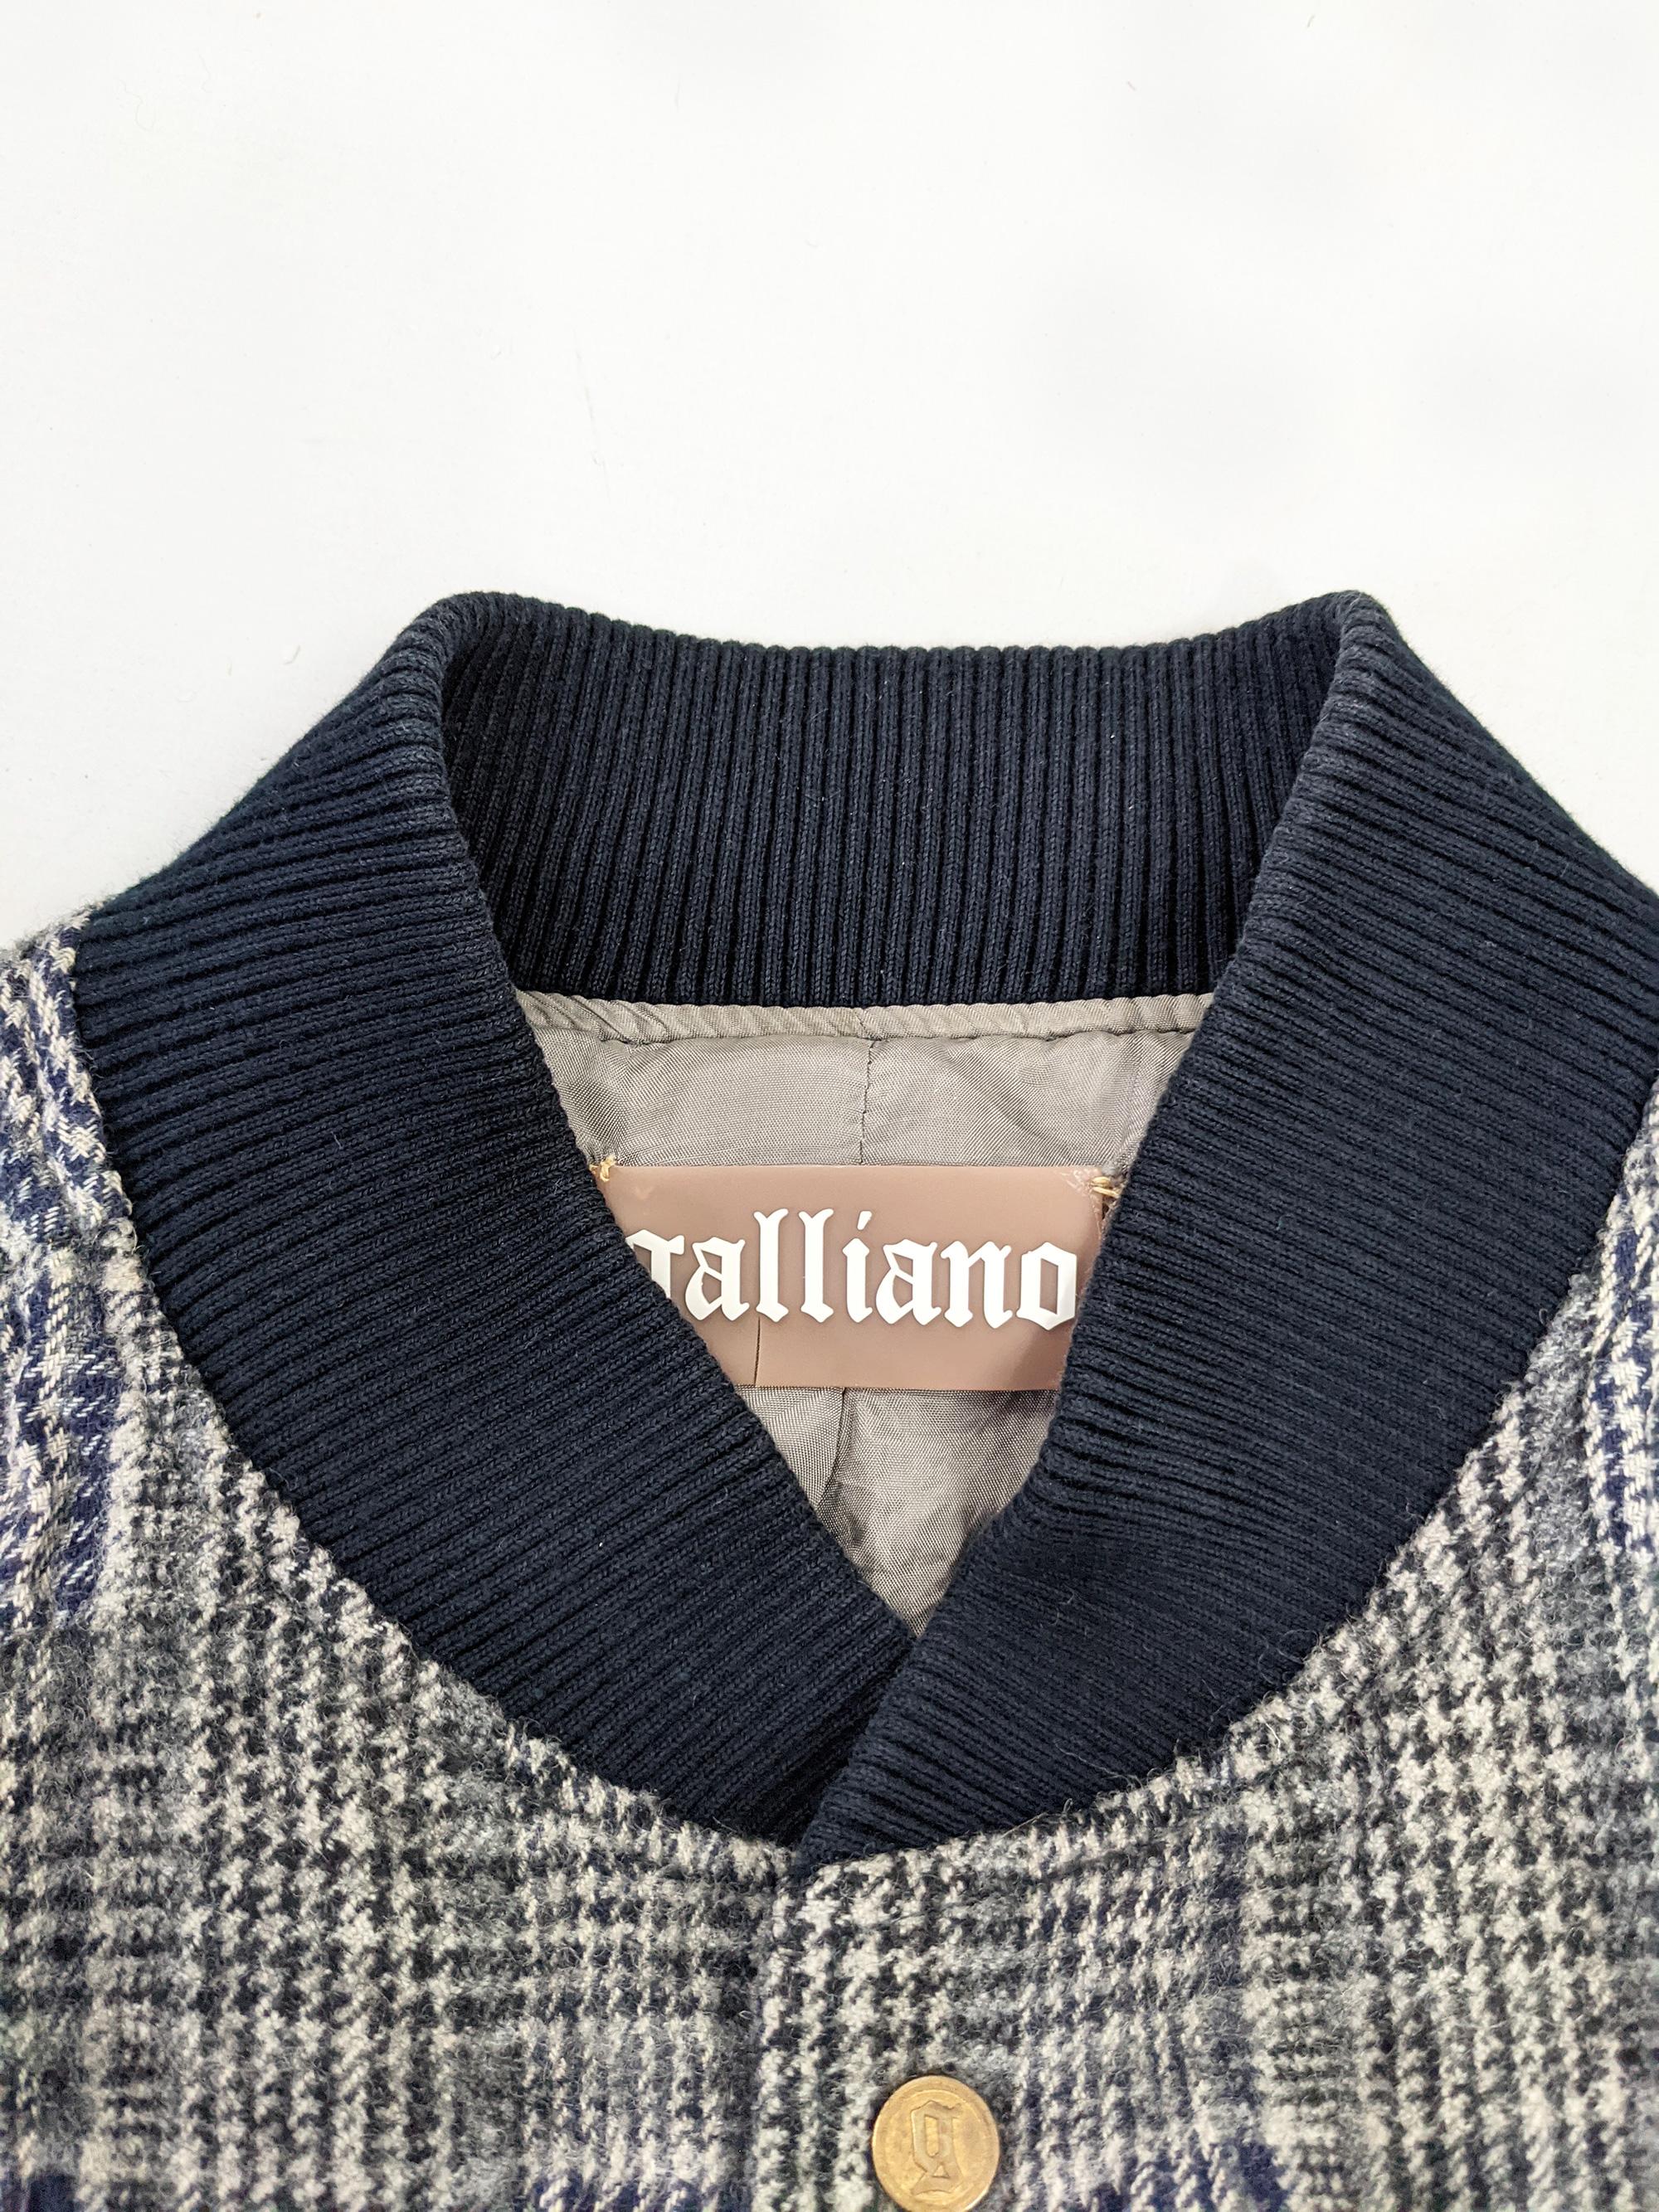 John Galliano Mens Prince of Wales Check Textured Wool Bomber Jacket, 2000s 1